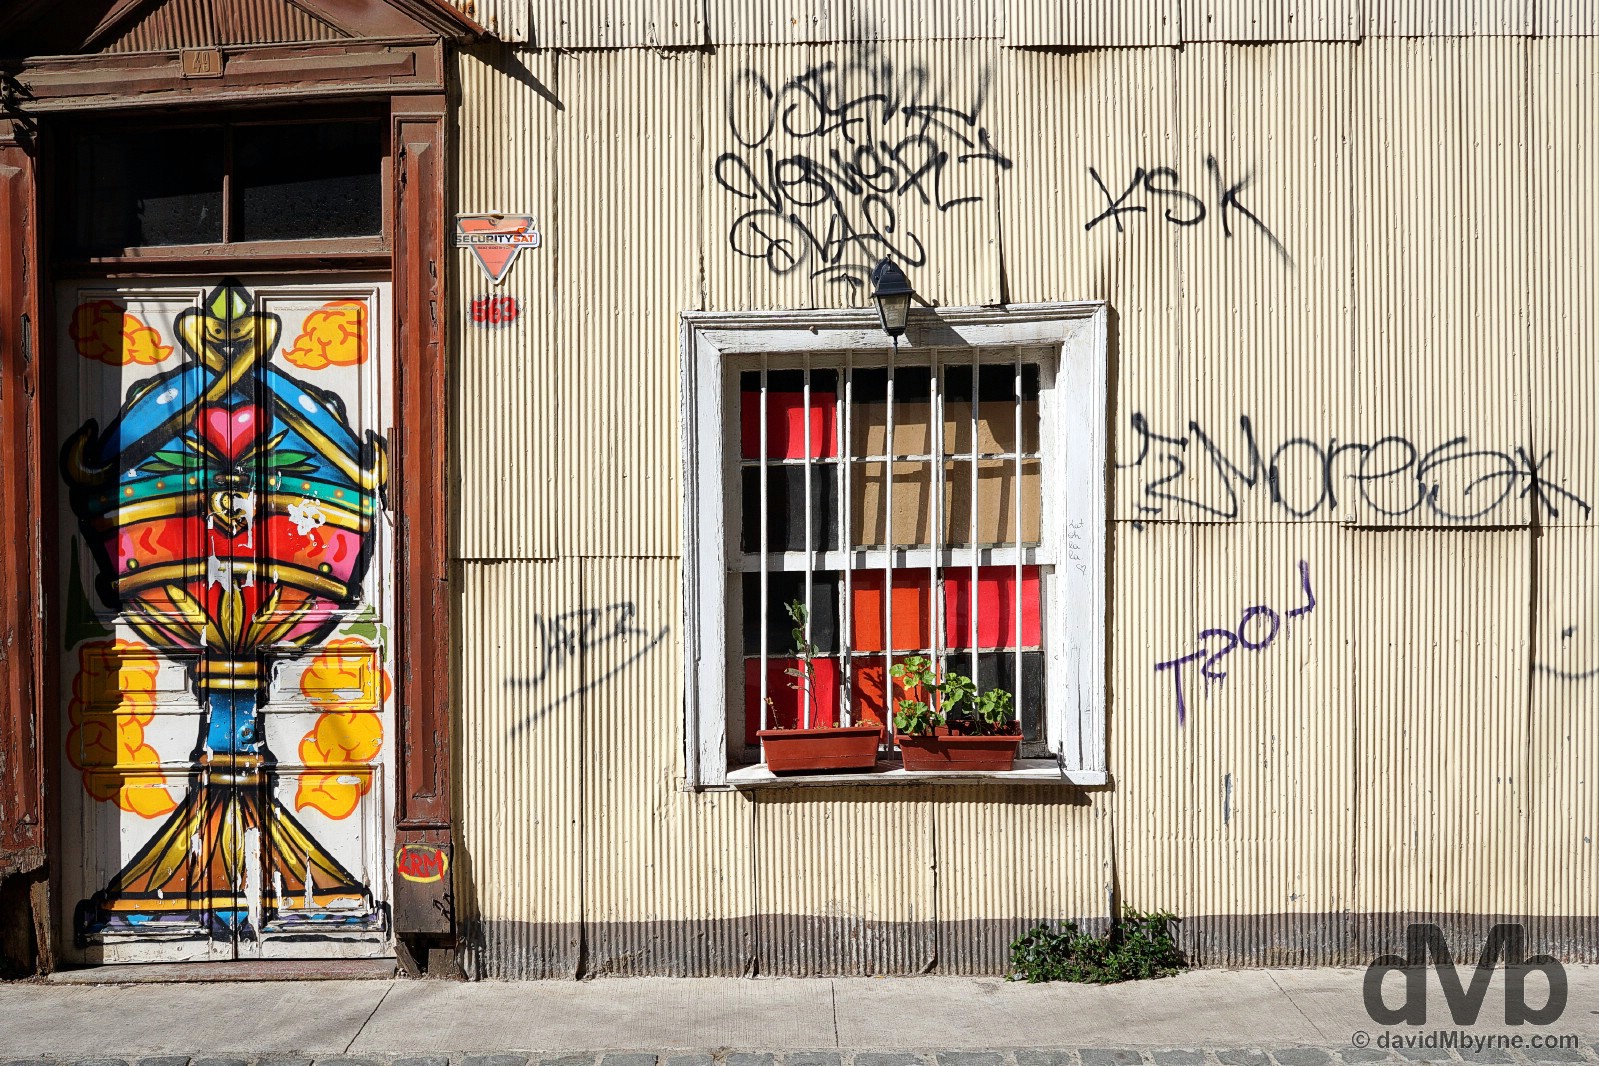 Corrugated iron housing in Cerro Concepcion, Valparaiso, Chile. October 7, 2015. 